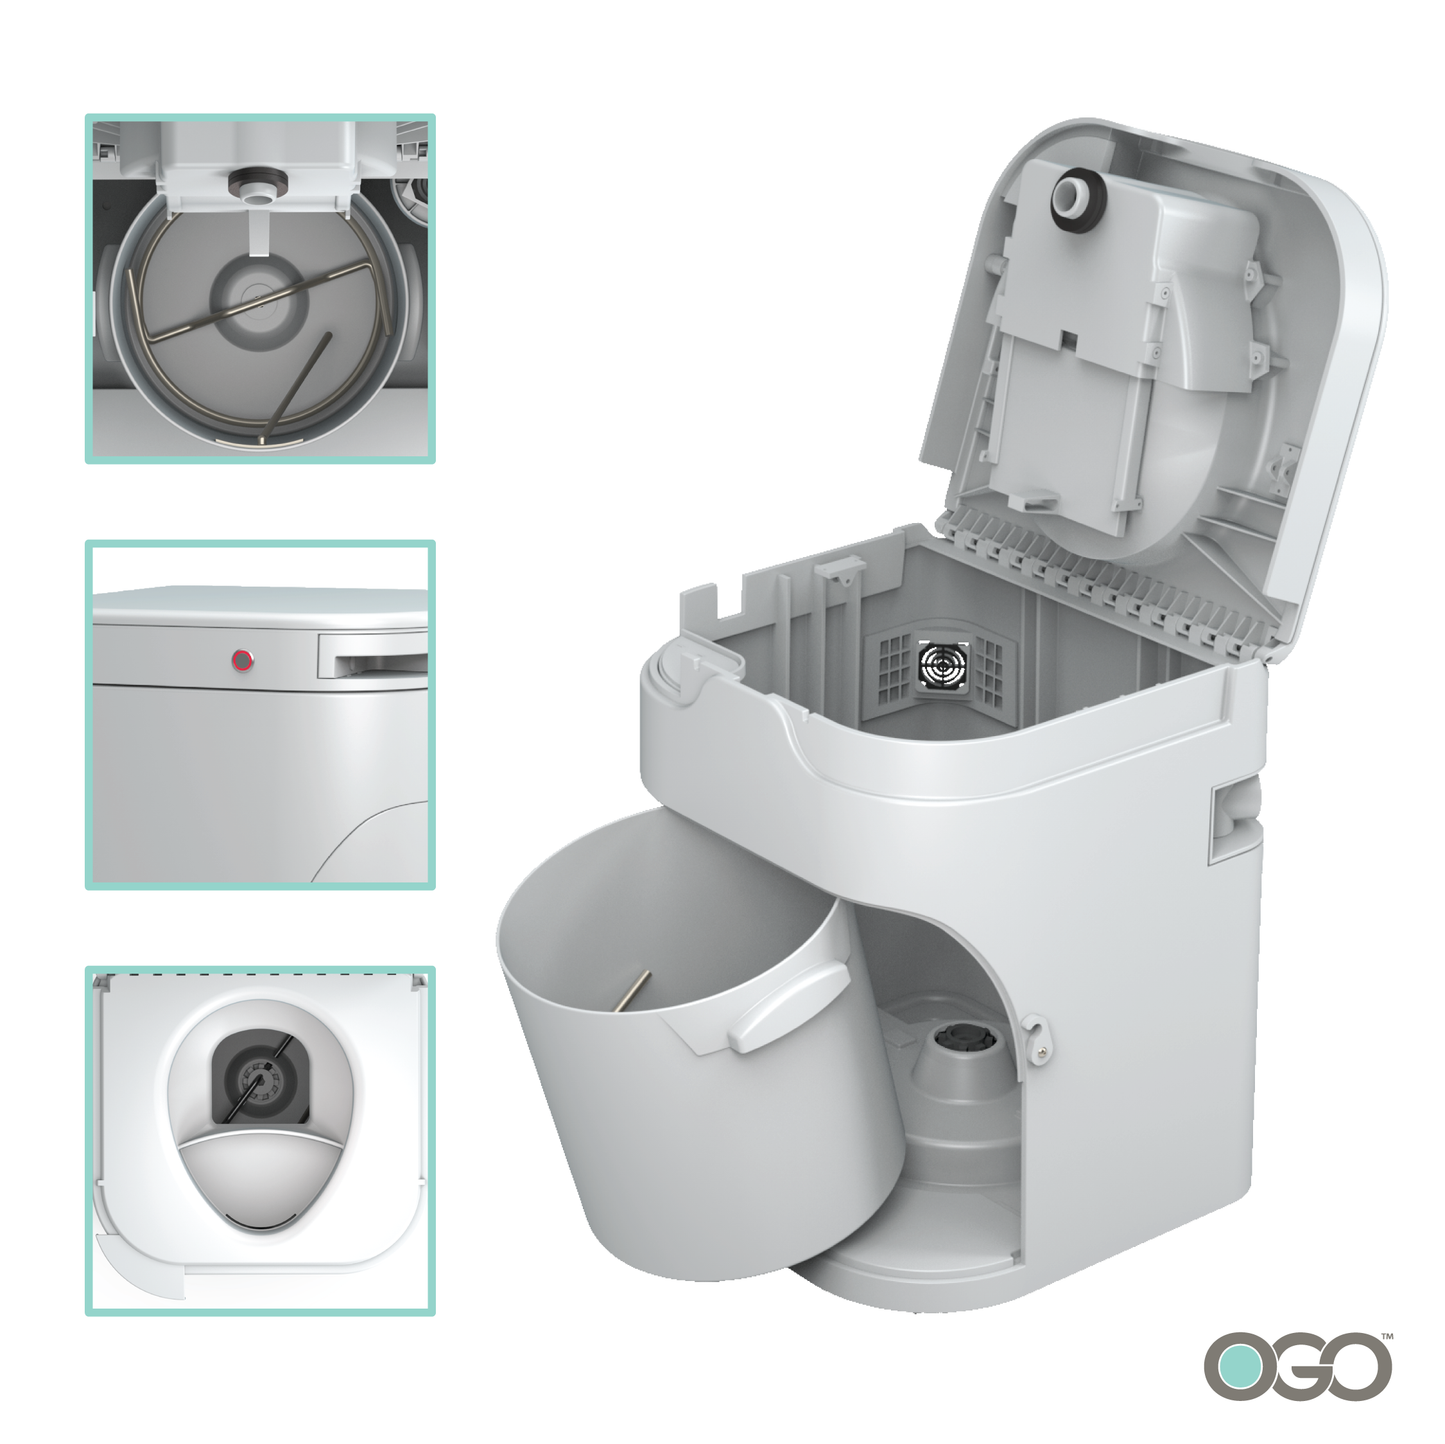 OGO Composting Toilet